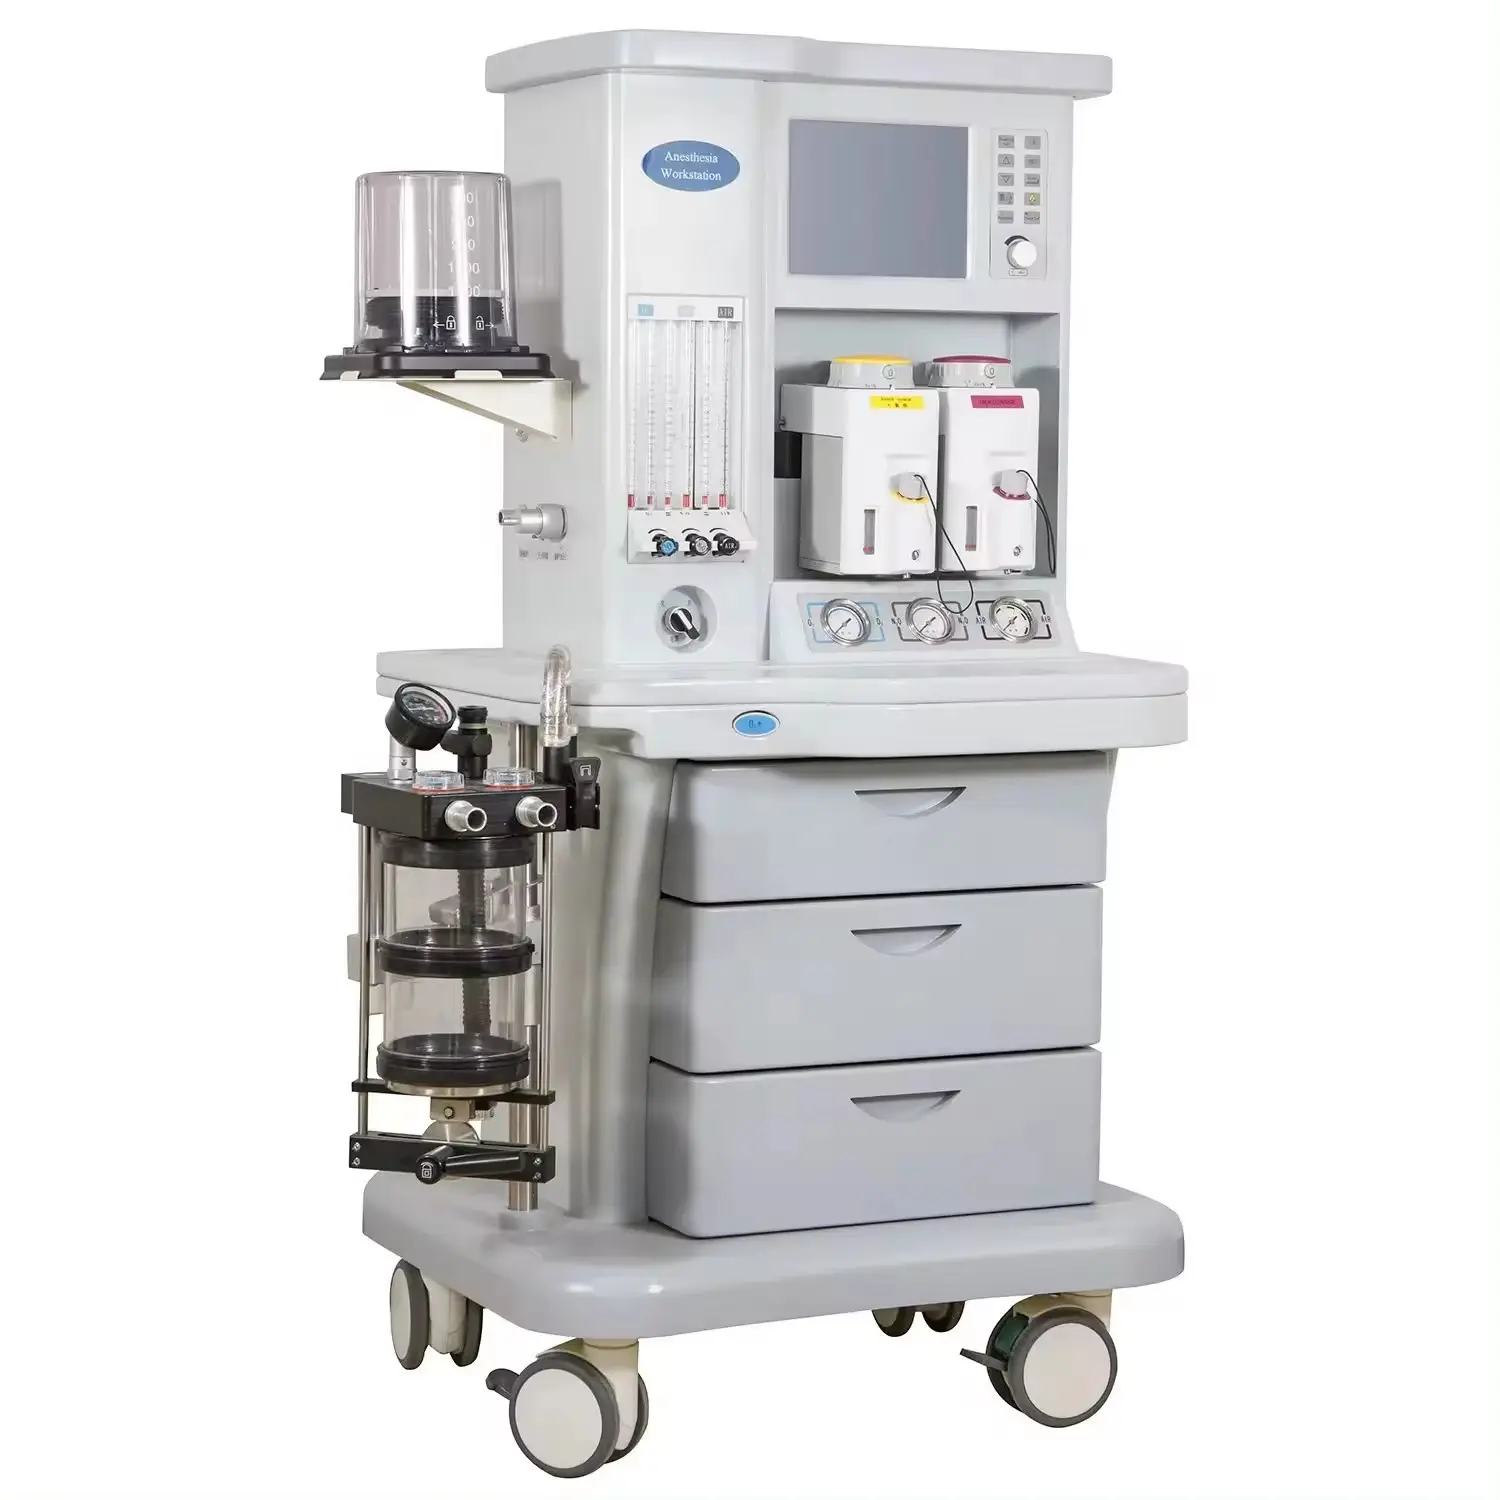 Amain AM-IIIC advanced portable anesthesia machine TFT display 3 drawers with 2 vaporizers